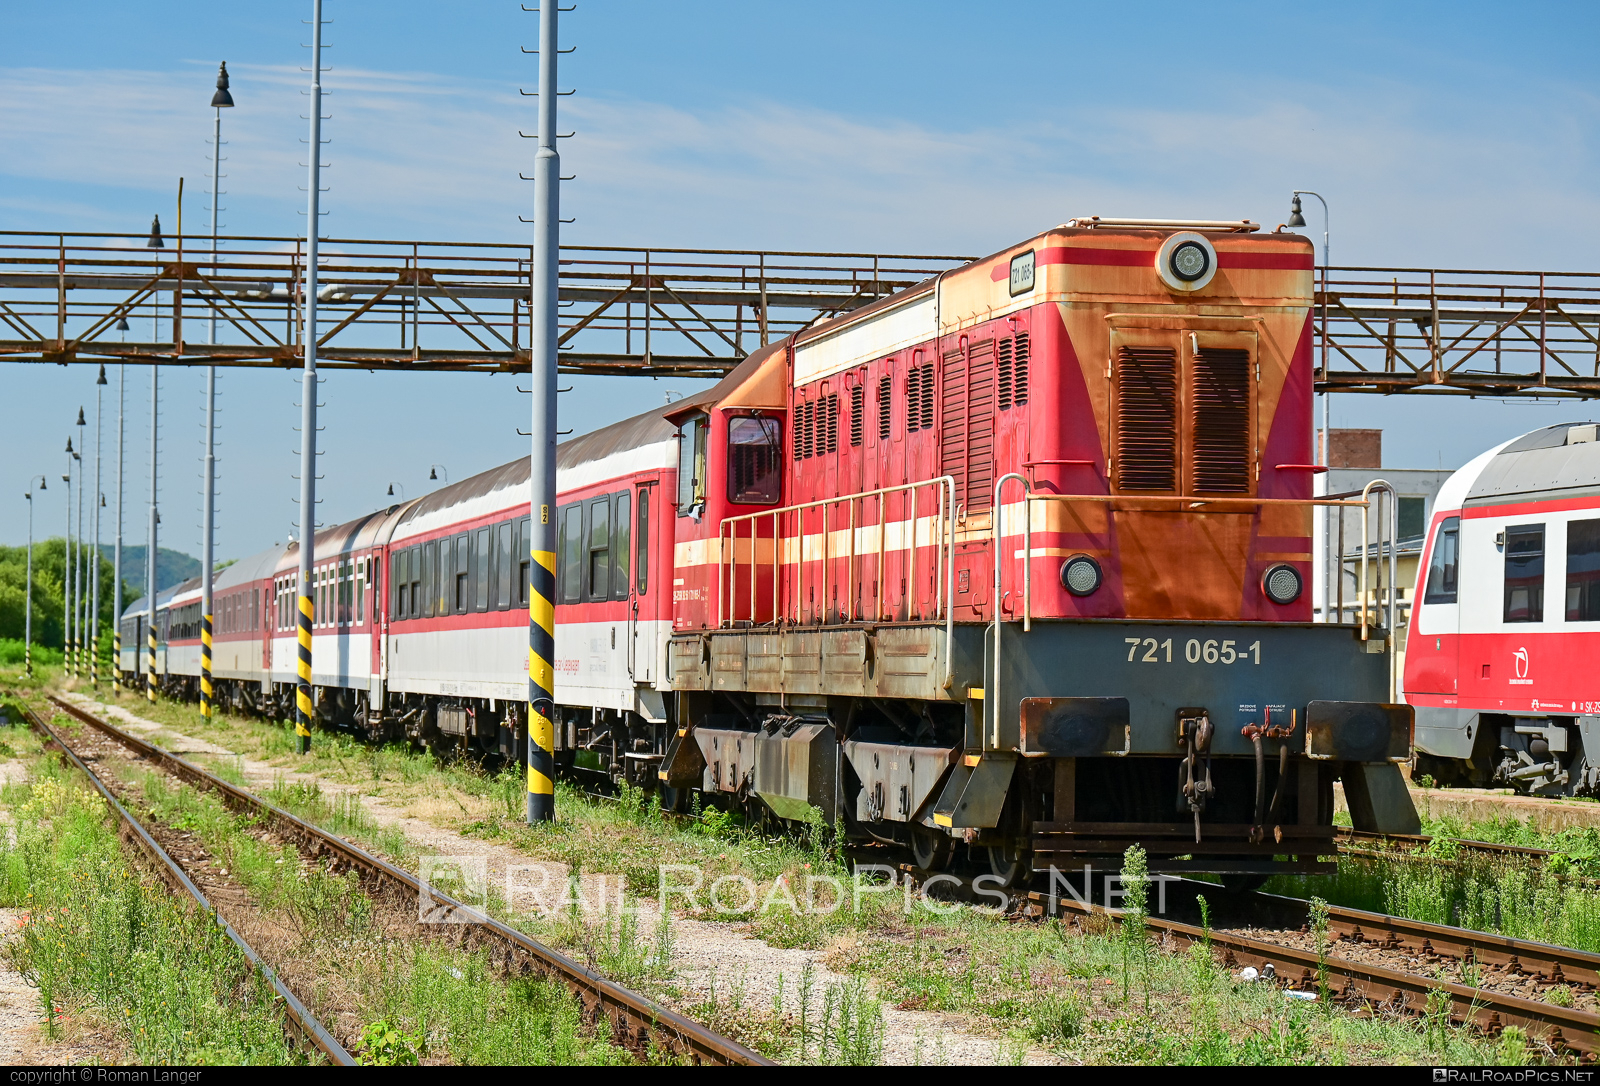 ČKD T 458.1 (721) - 721 065-1 operated by Železnice Slovenskej Republiky #ckd #ckd721 #ckdt4581 #locomotive721 #locomotivet4581 #velkyhektor #zelezniceslovenskejrepubliky #zsr